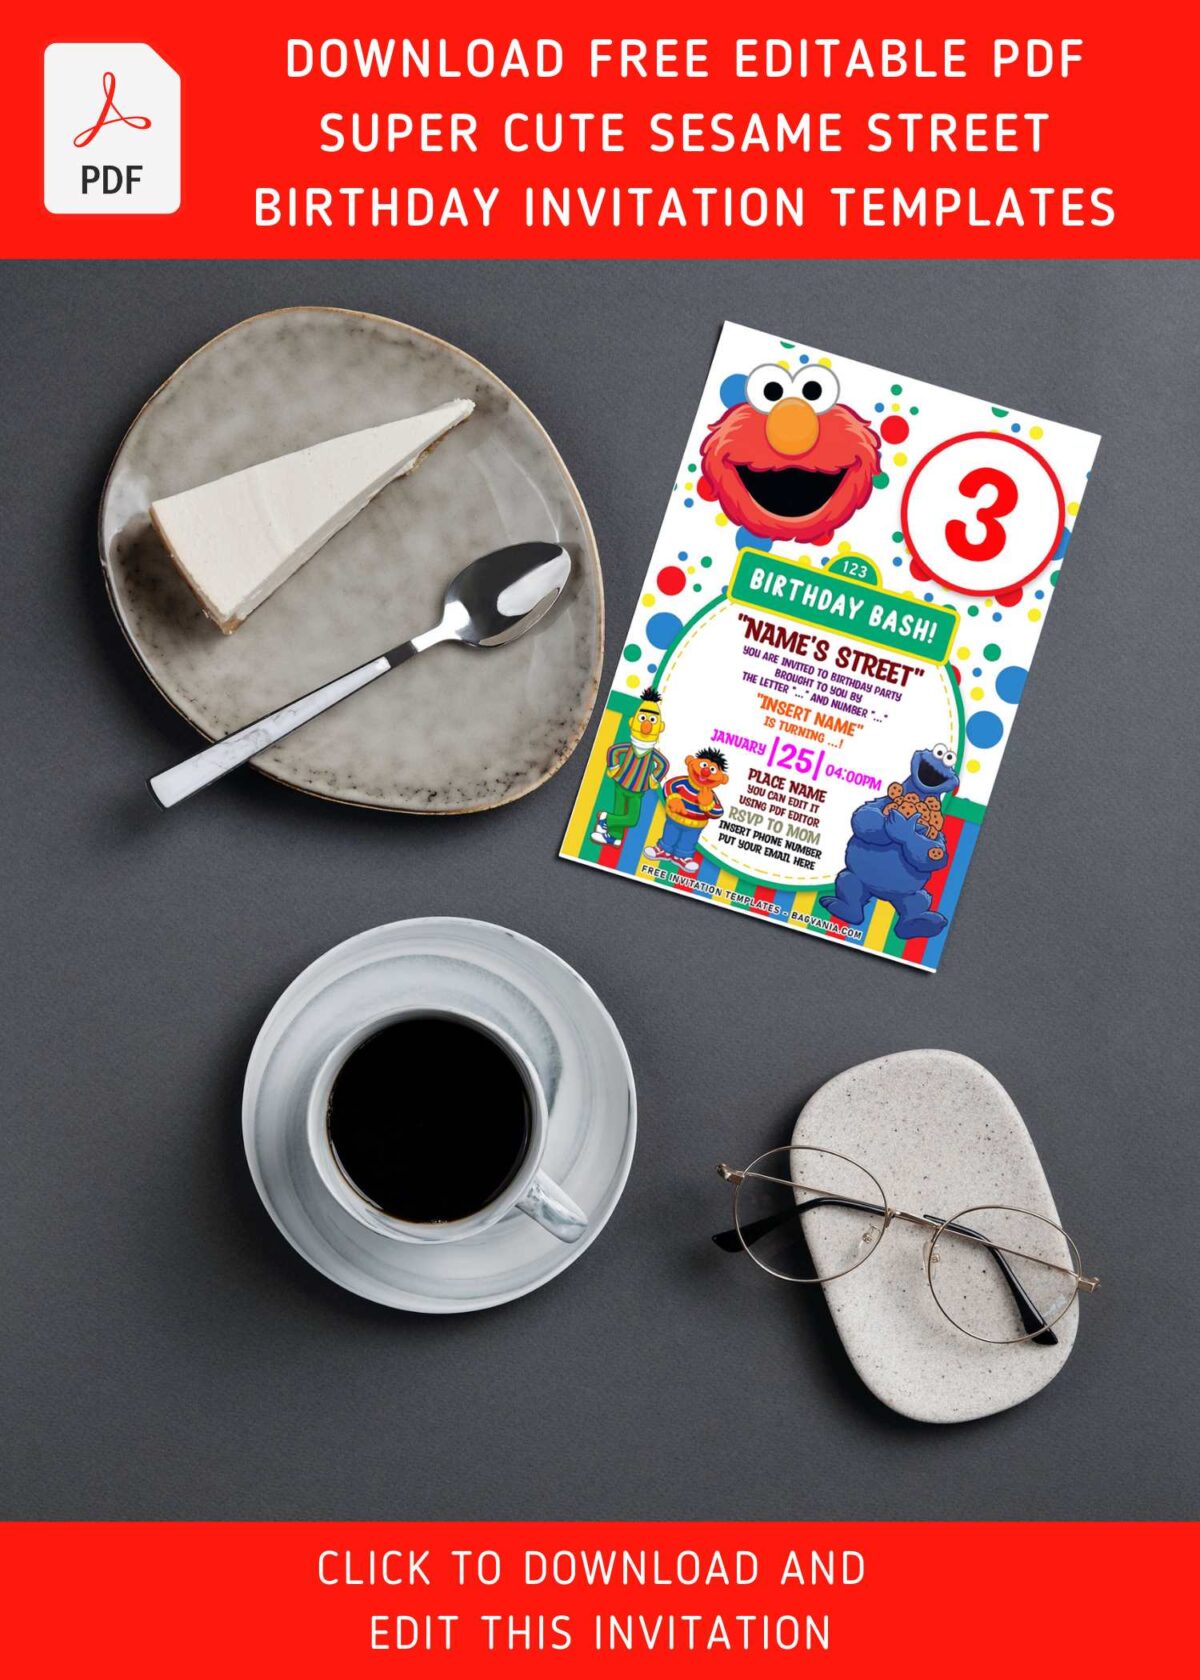 (Free Editable PDF) Super Cute Sesame Street Birthday Invitation Templates with cute Cookie Monster